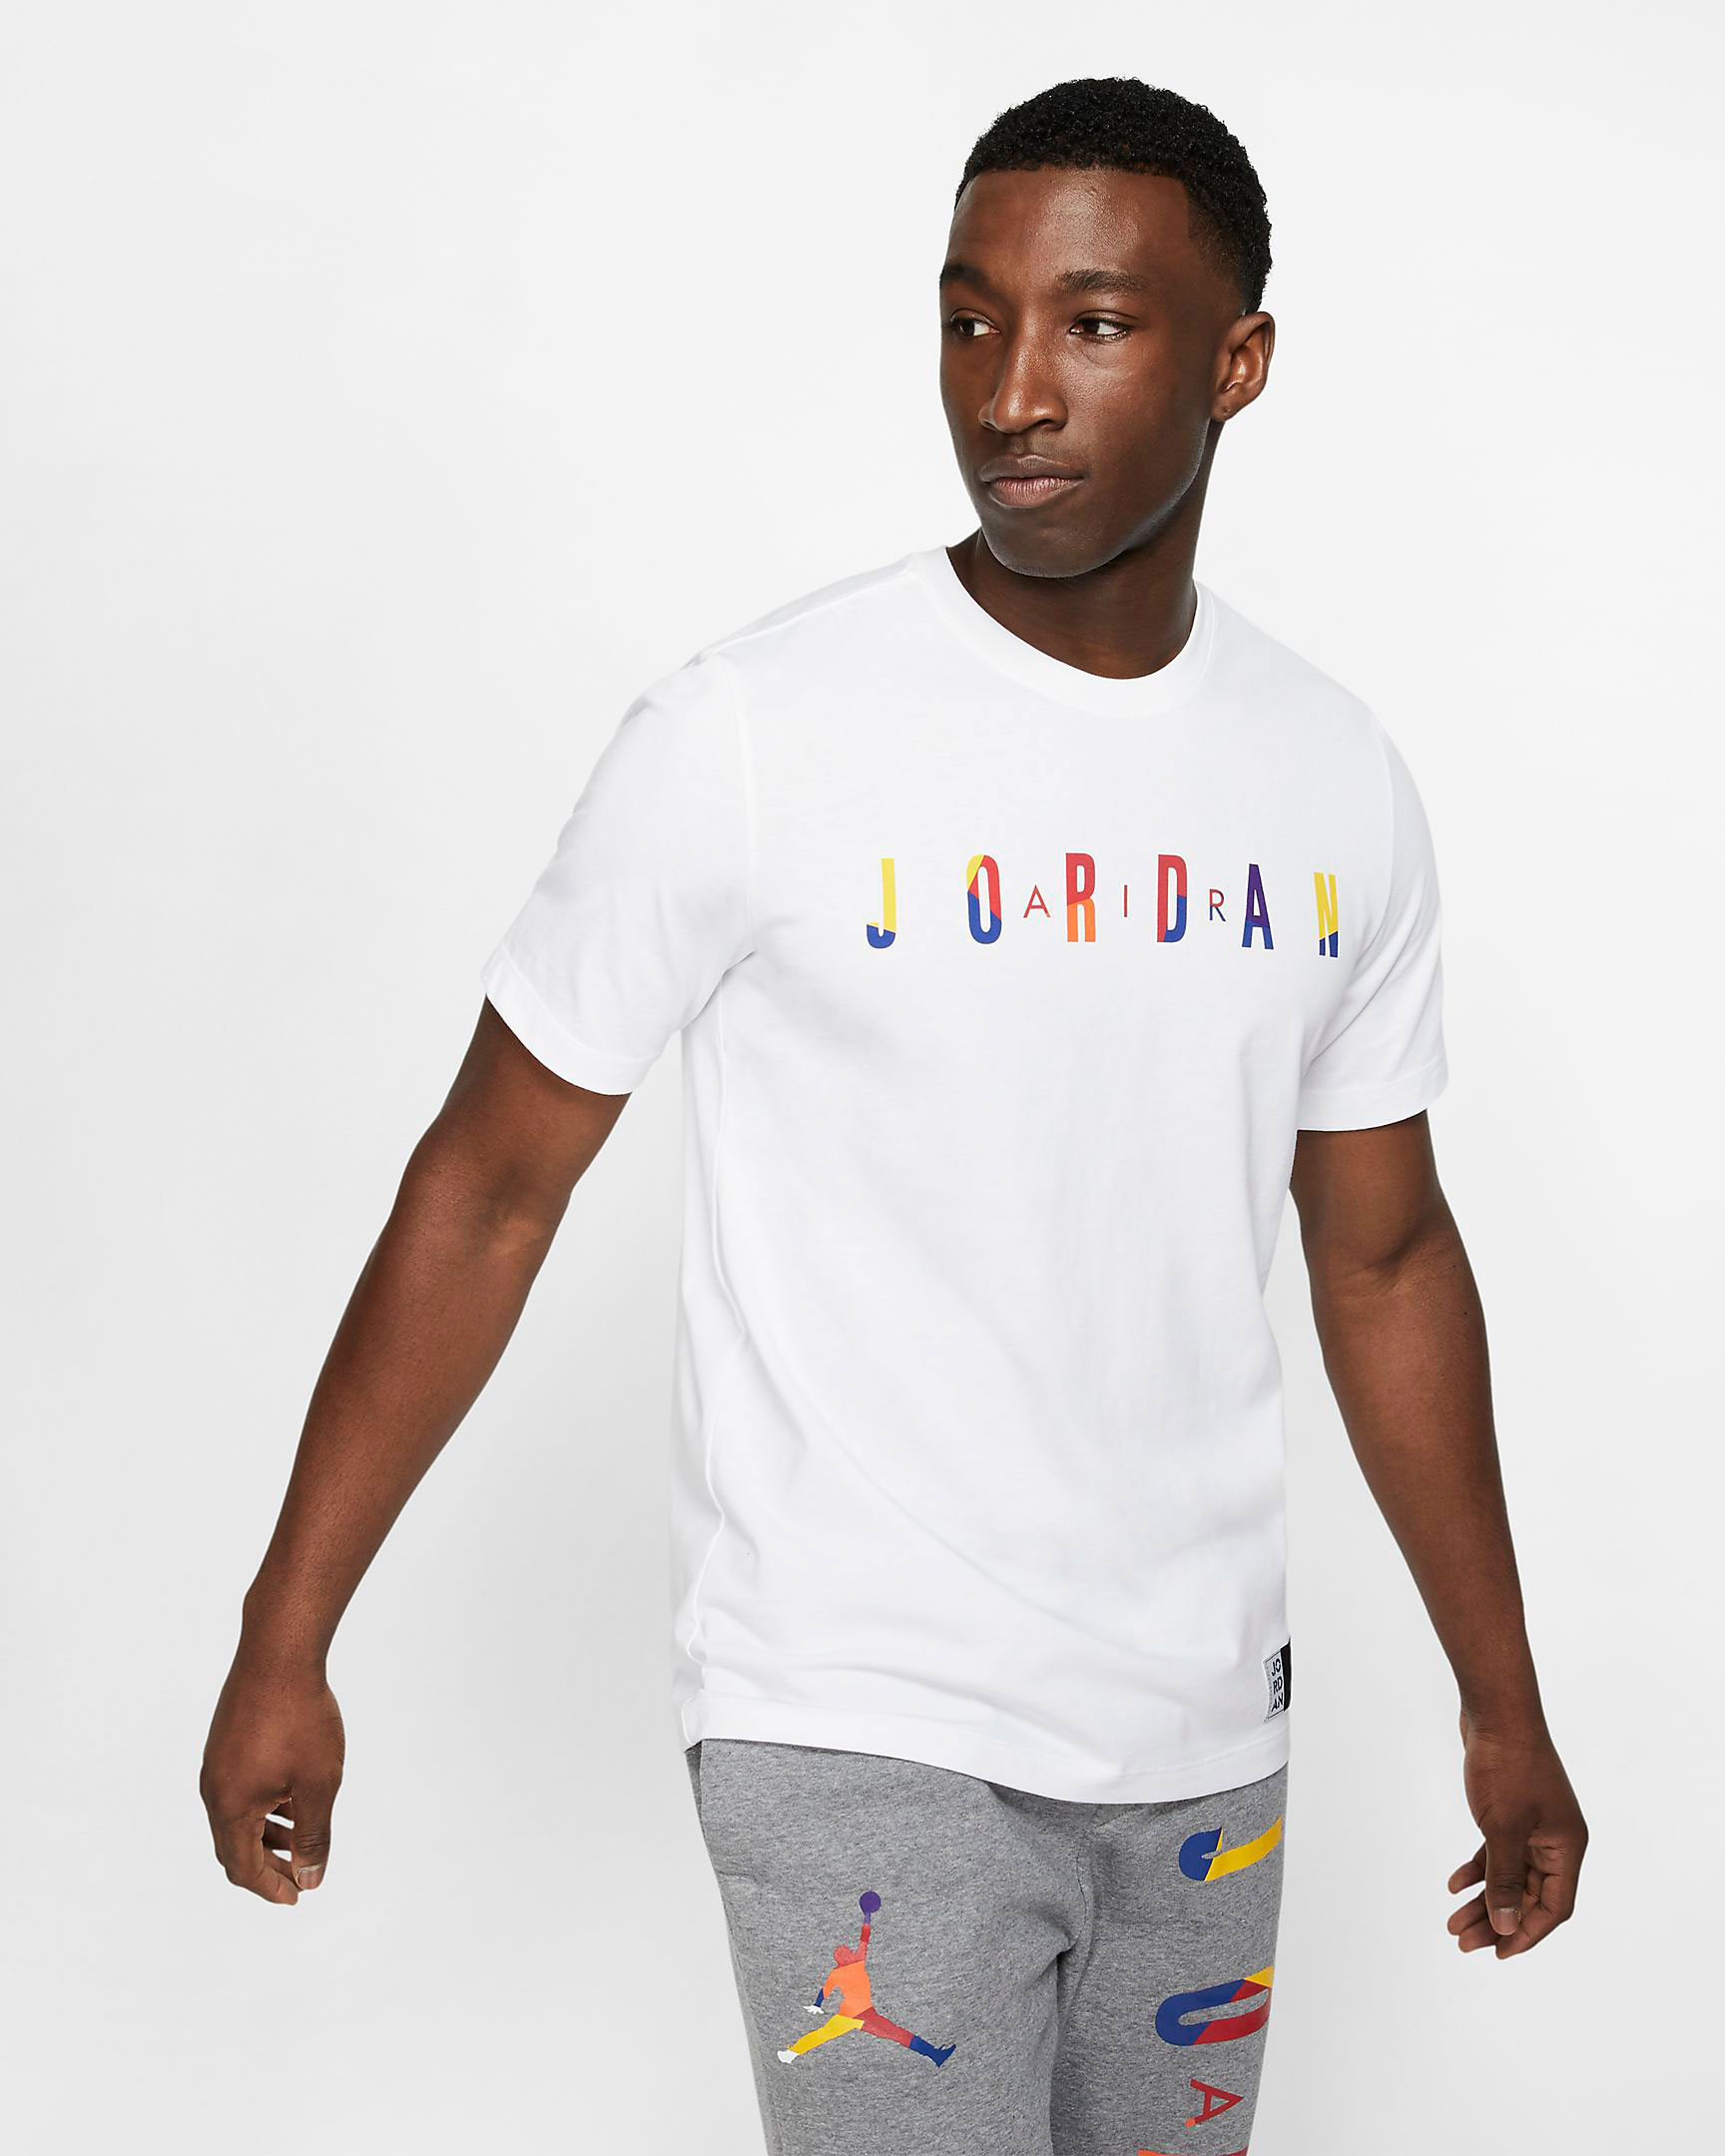 Air Jordan 13 Lakers Matching Shirts | SneakerFits.com